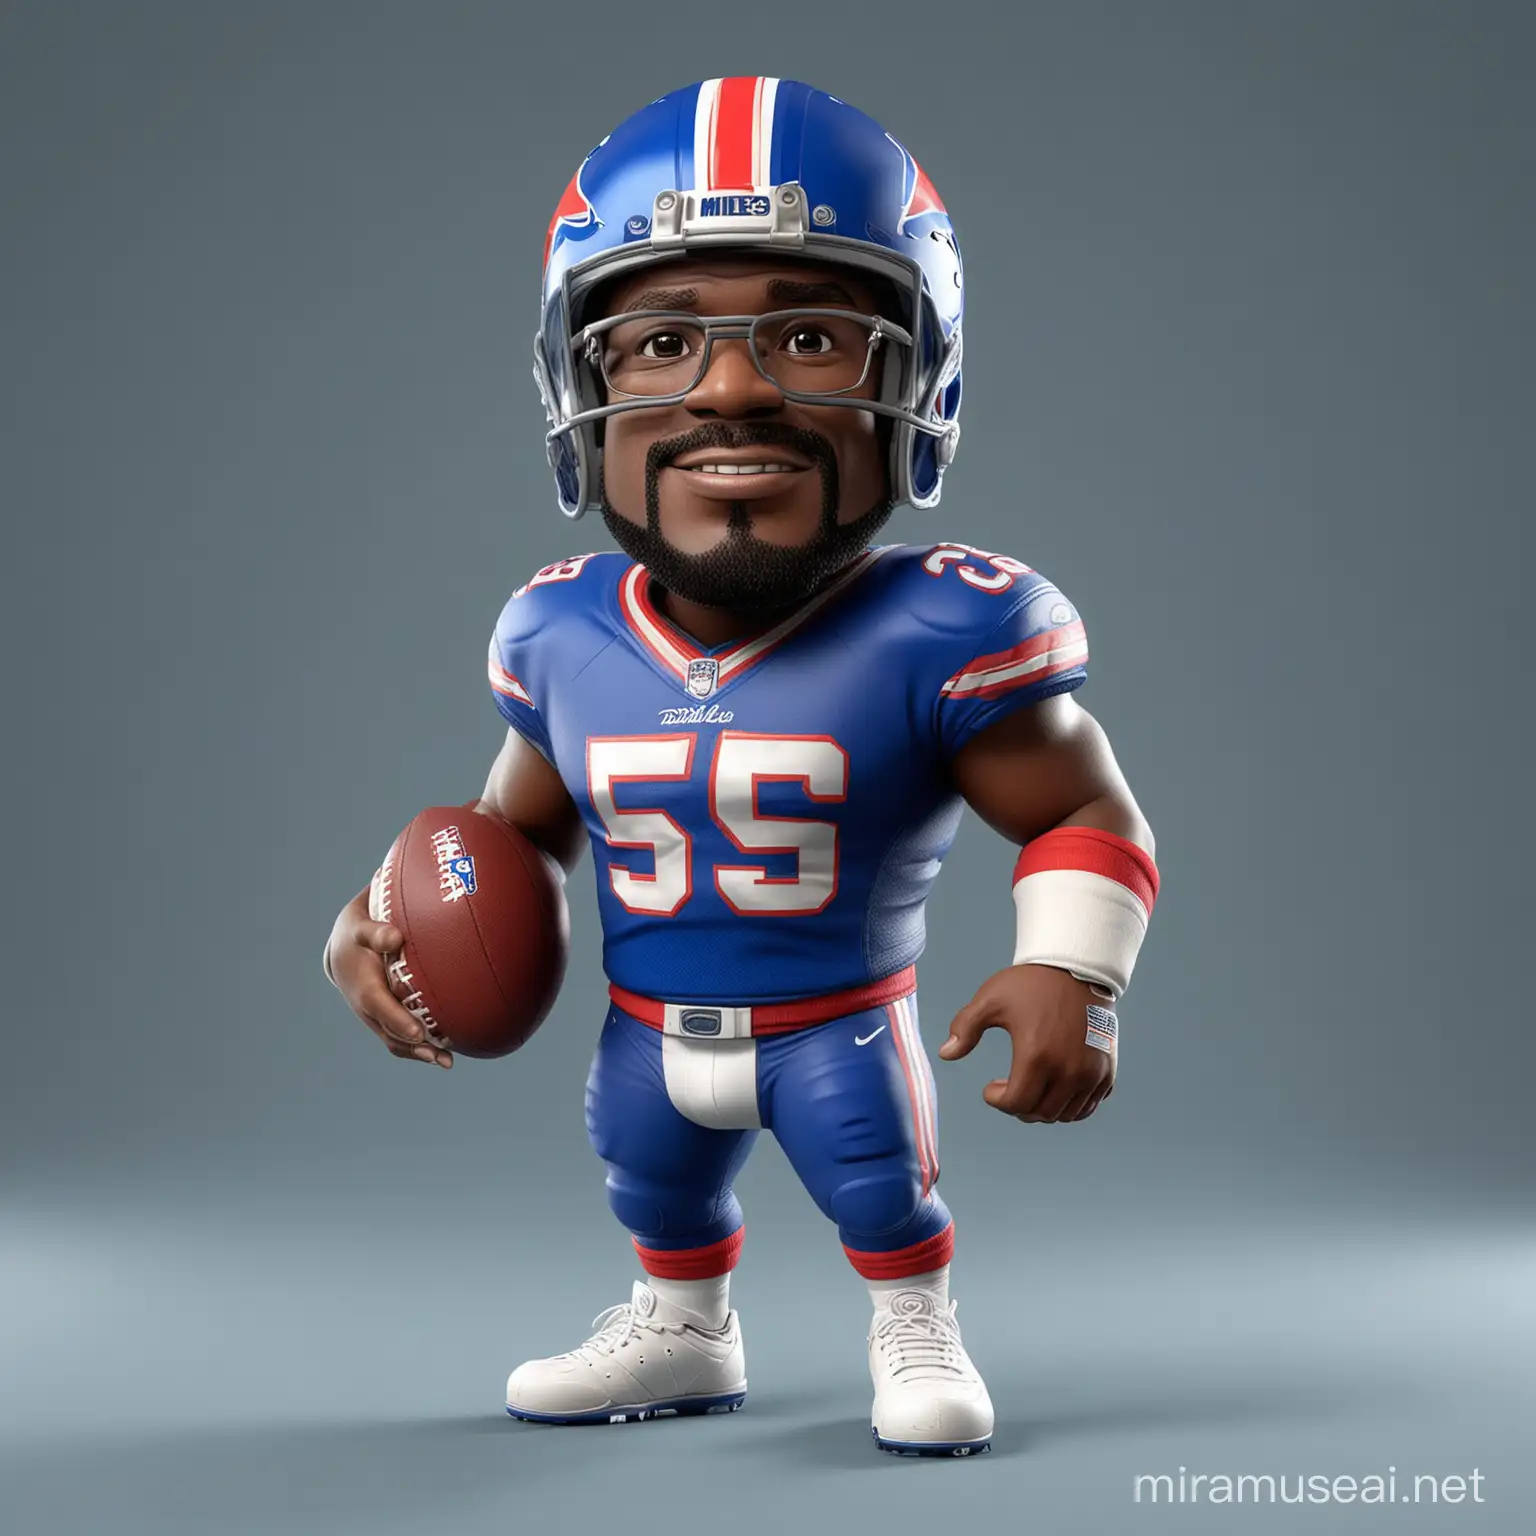 a cute 3d rendered nfl player looks like von miller, wearing american football helmet and Buffalo Bills kit, standing pose, cartoon style